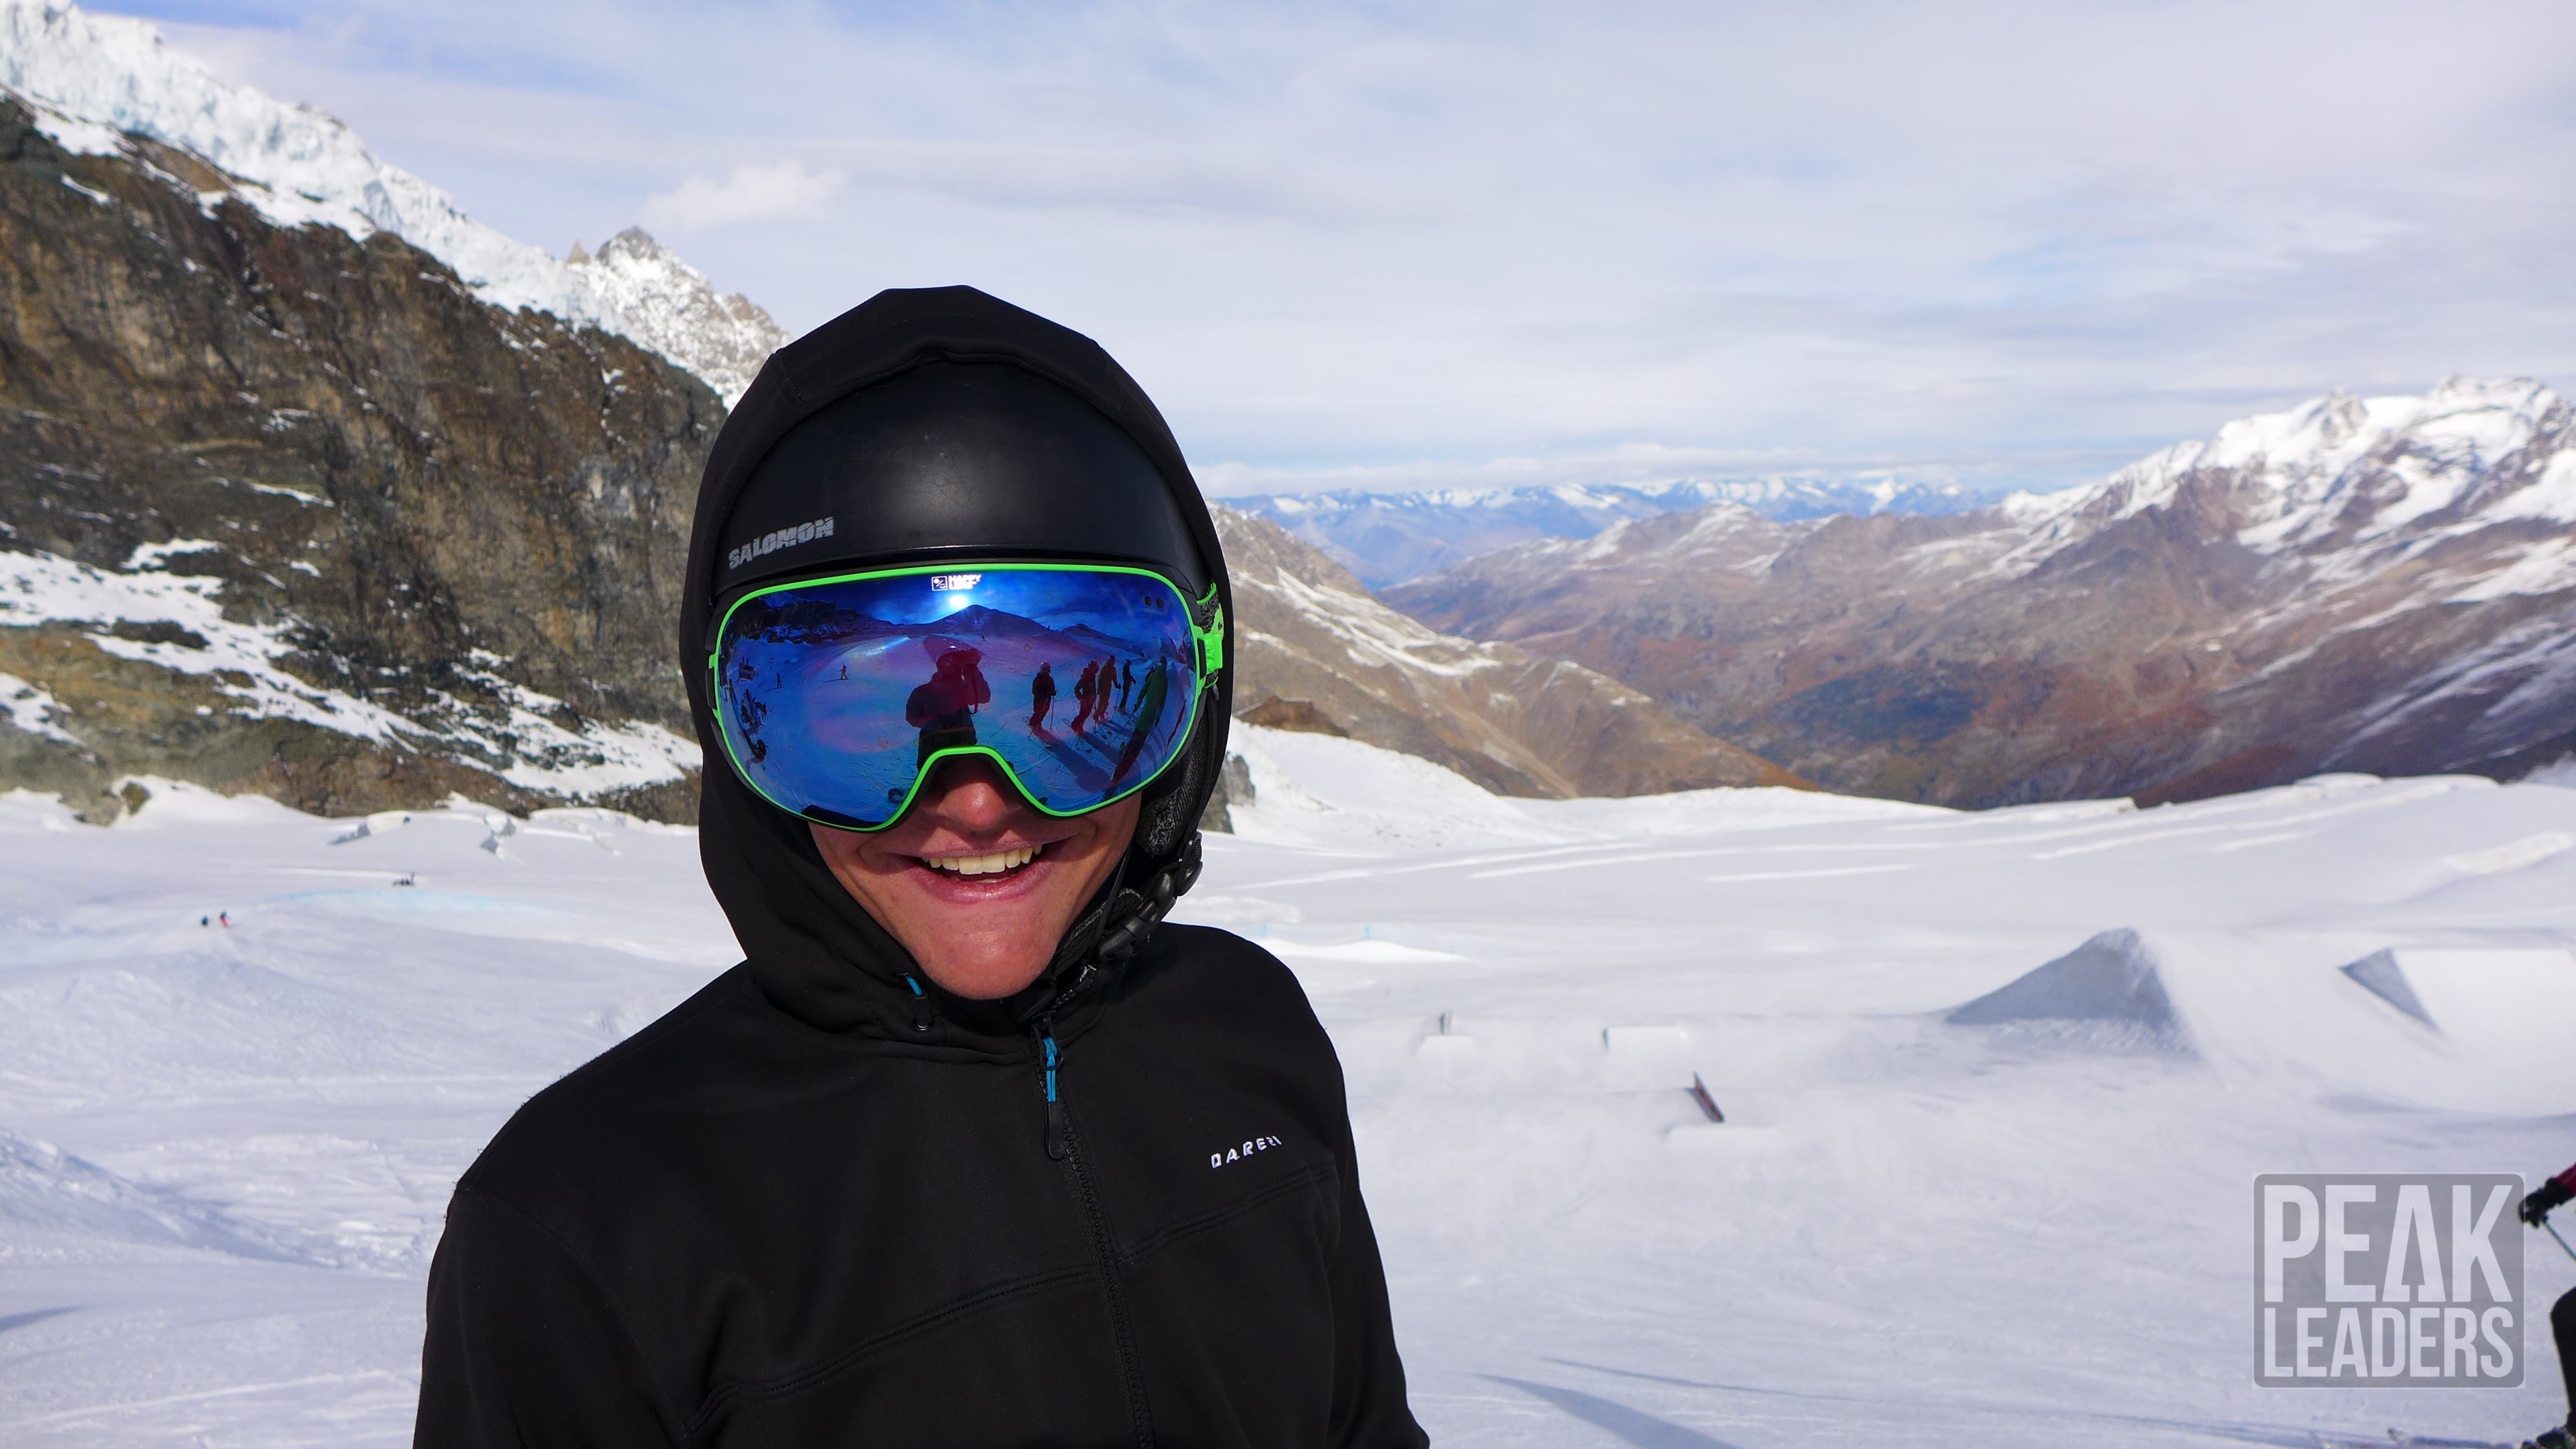 Daniel Thomson Peak Leaders Ski Instructor Course Graduate